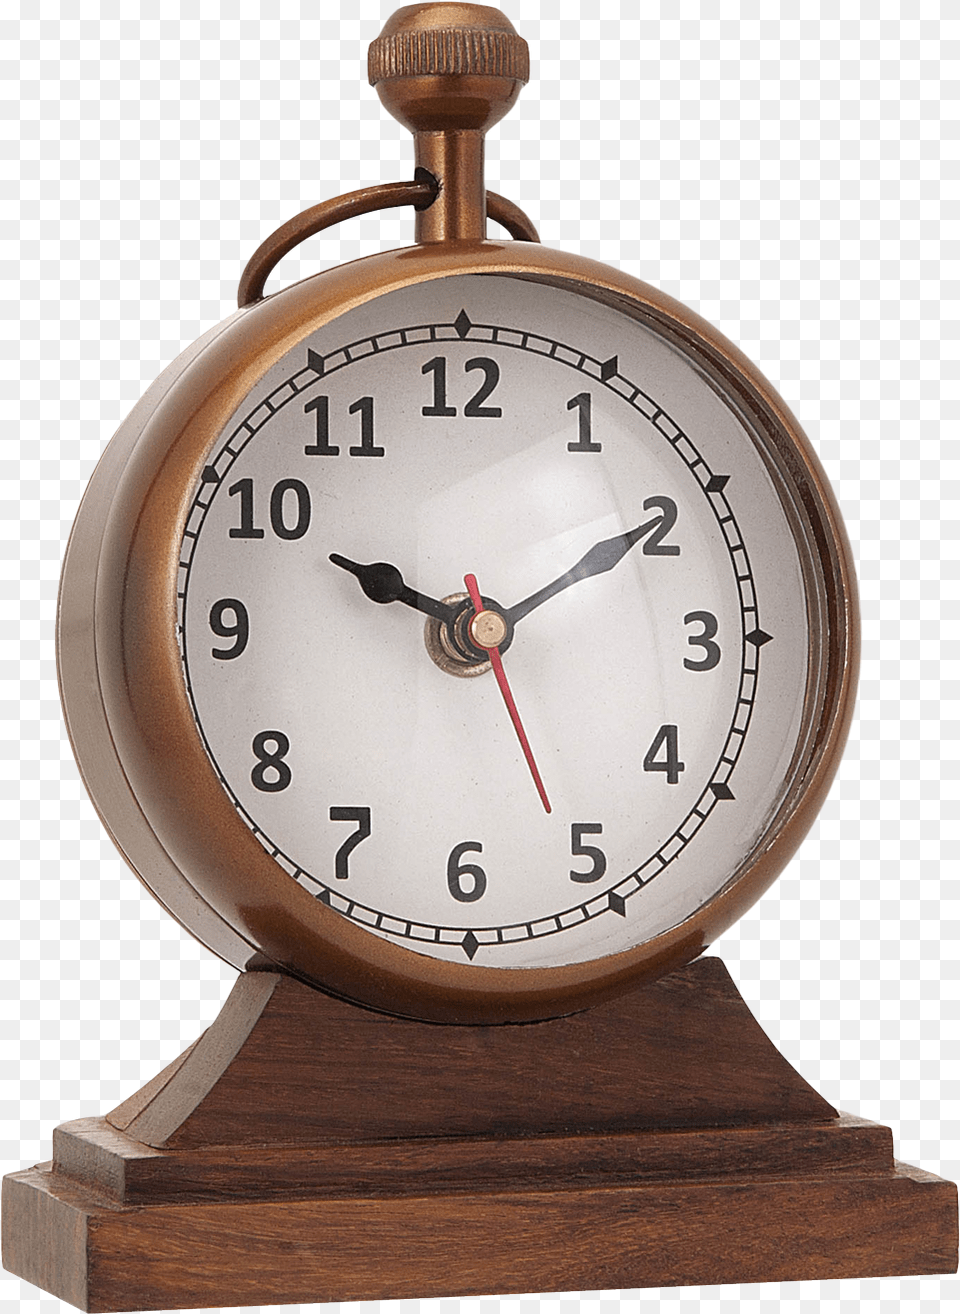 Wooden Alarm Clock Image Table Clocks, Alarm Clock, Wristwatch, Analog Clock Free Transparent Png